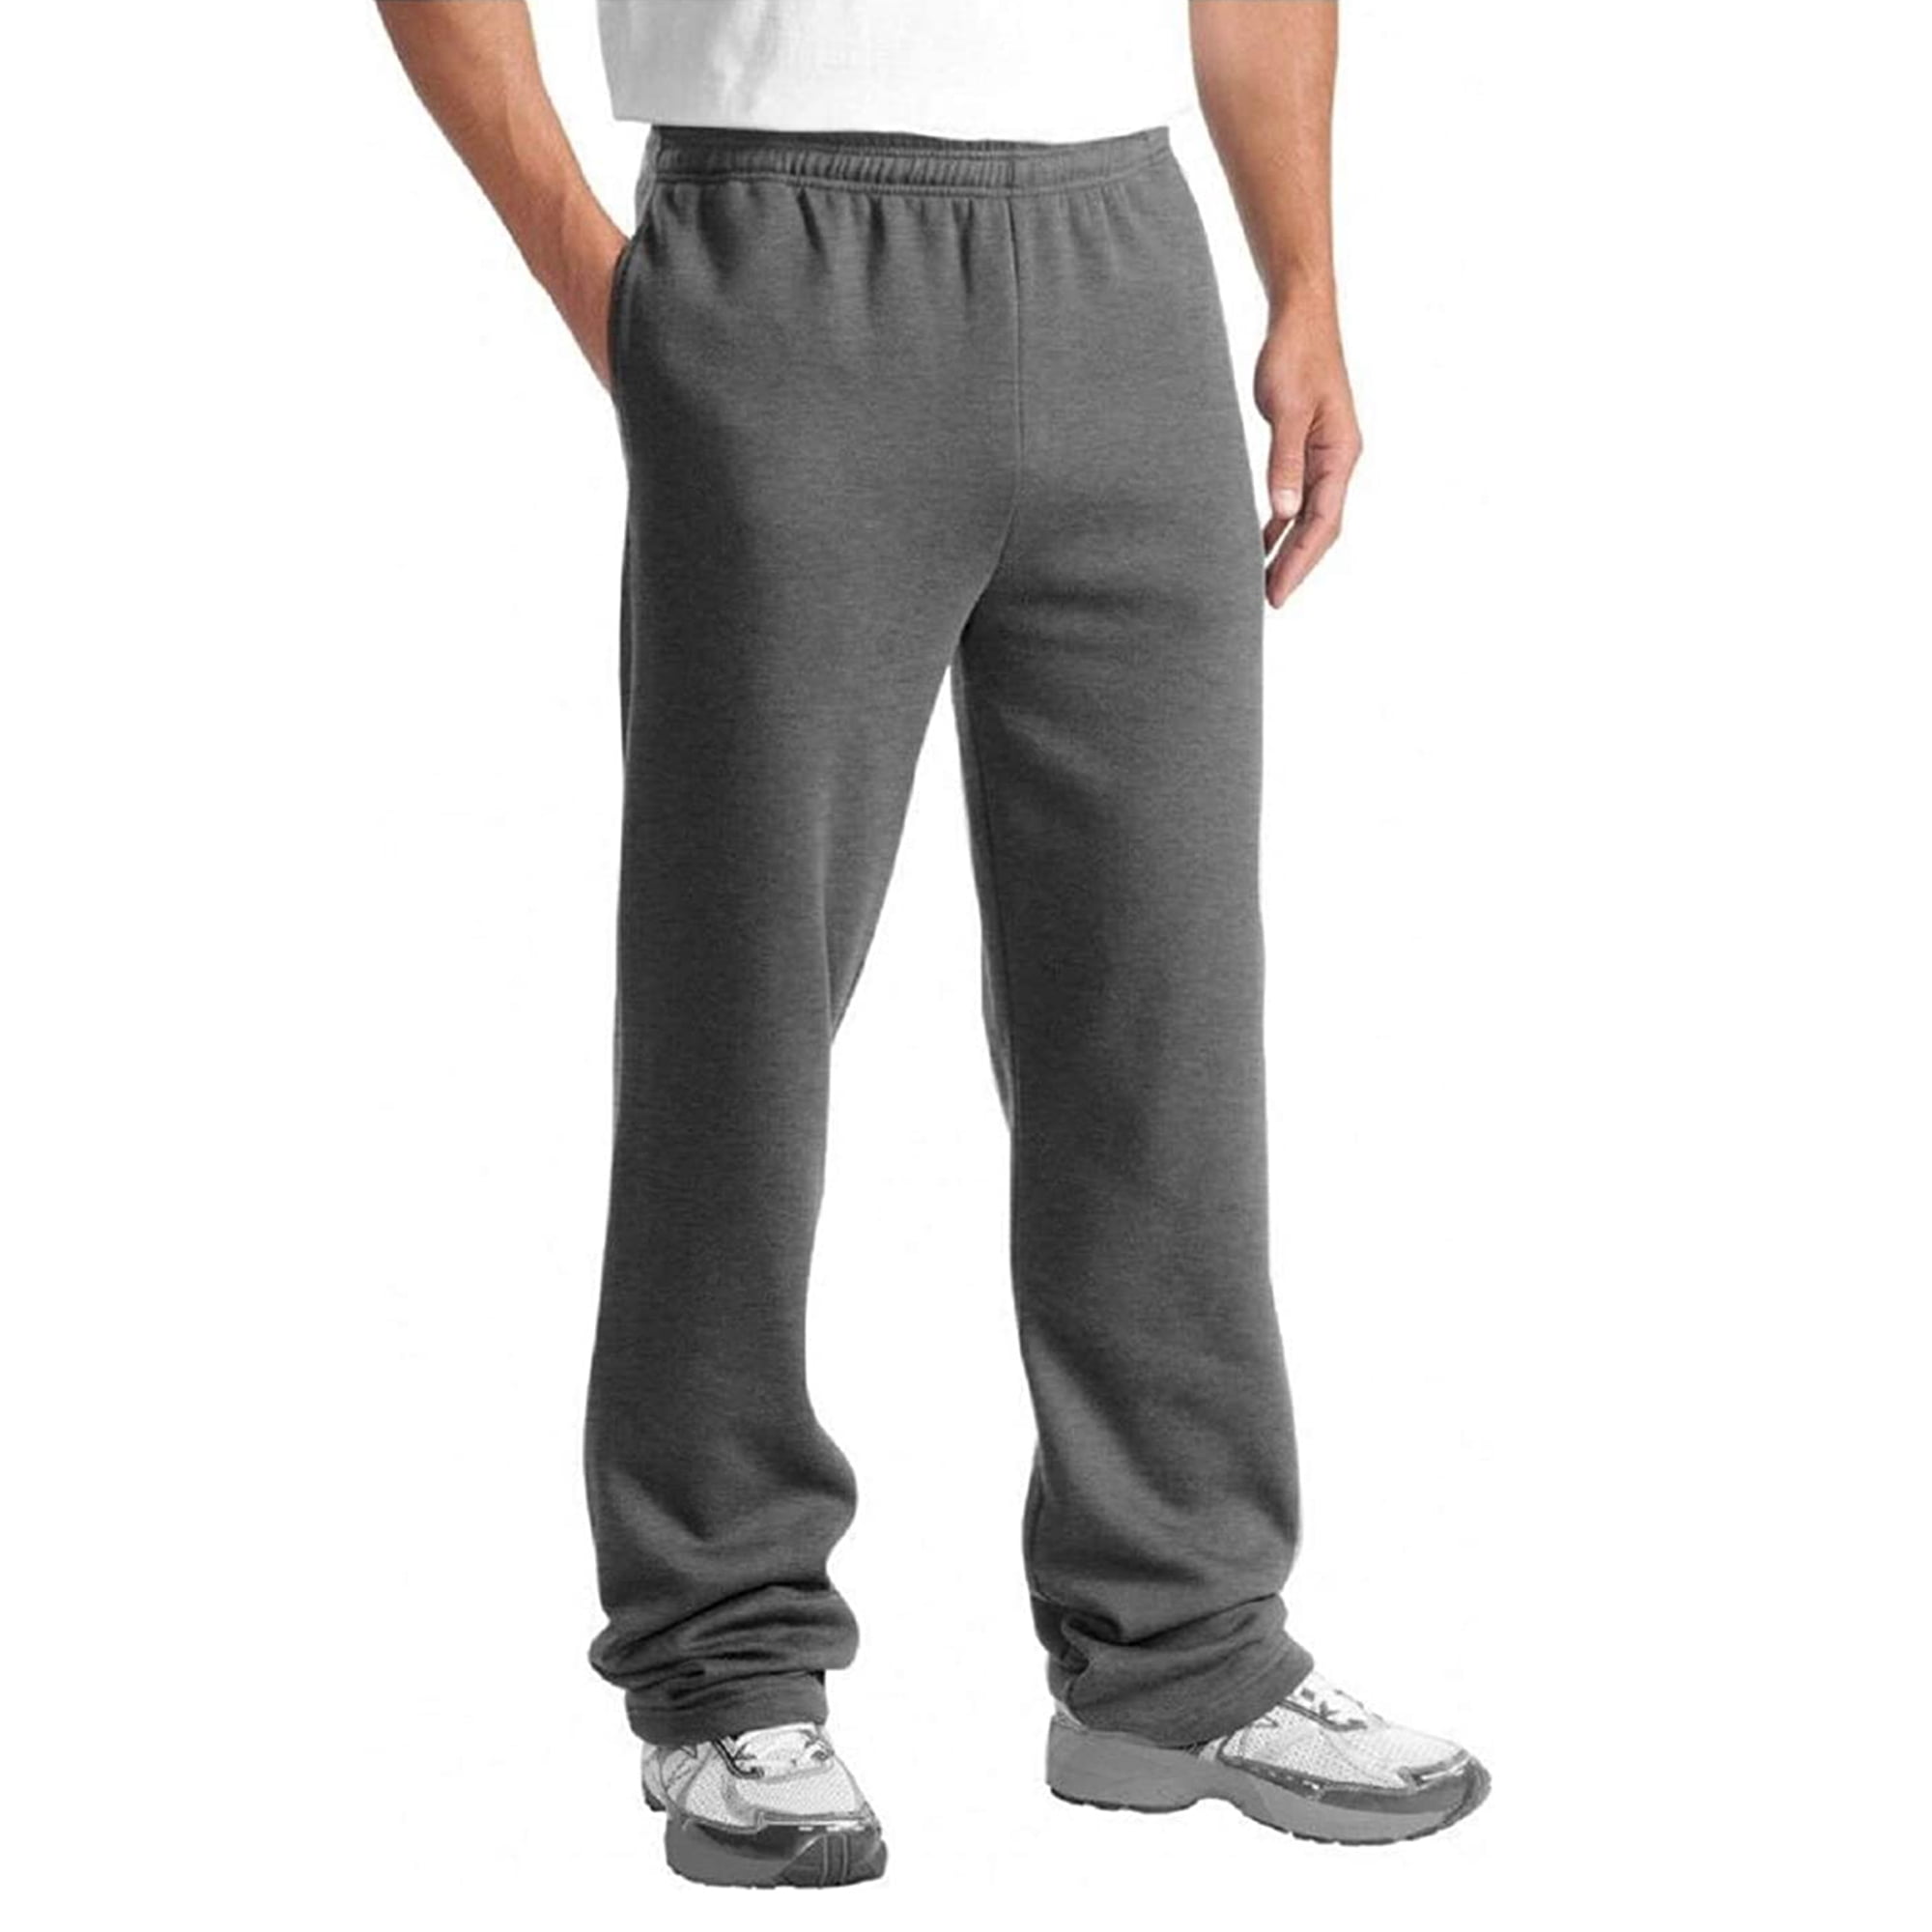 Nike Tech Fleece Open Pants in Dark Grey, Heather, & Black | REVOLVE